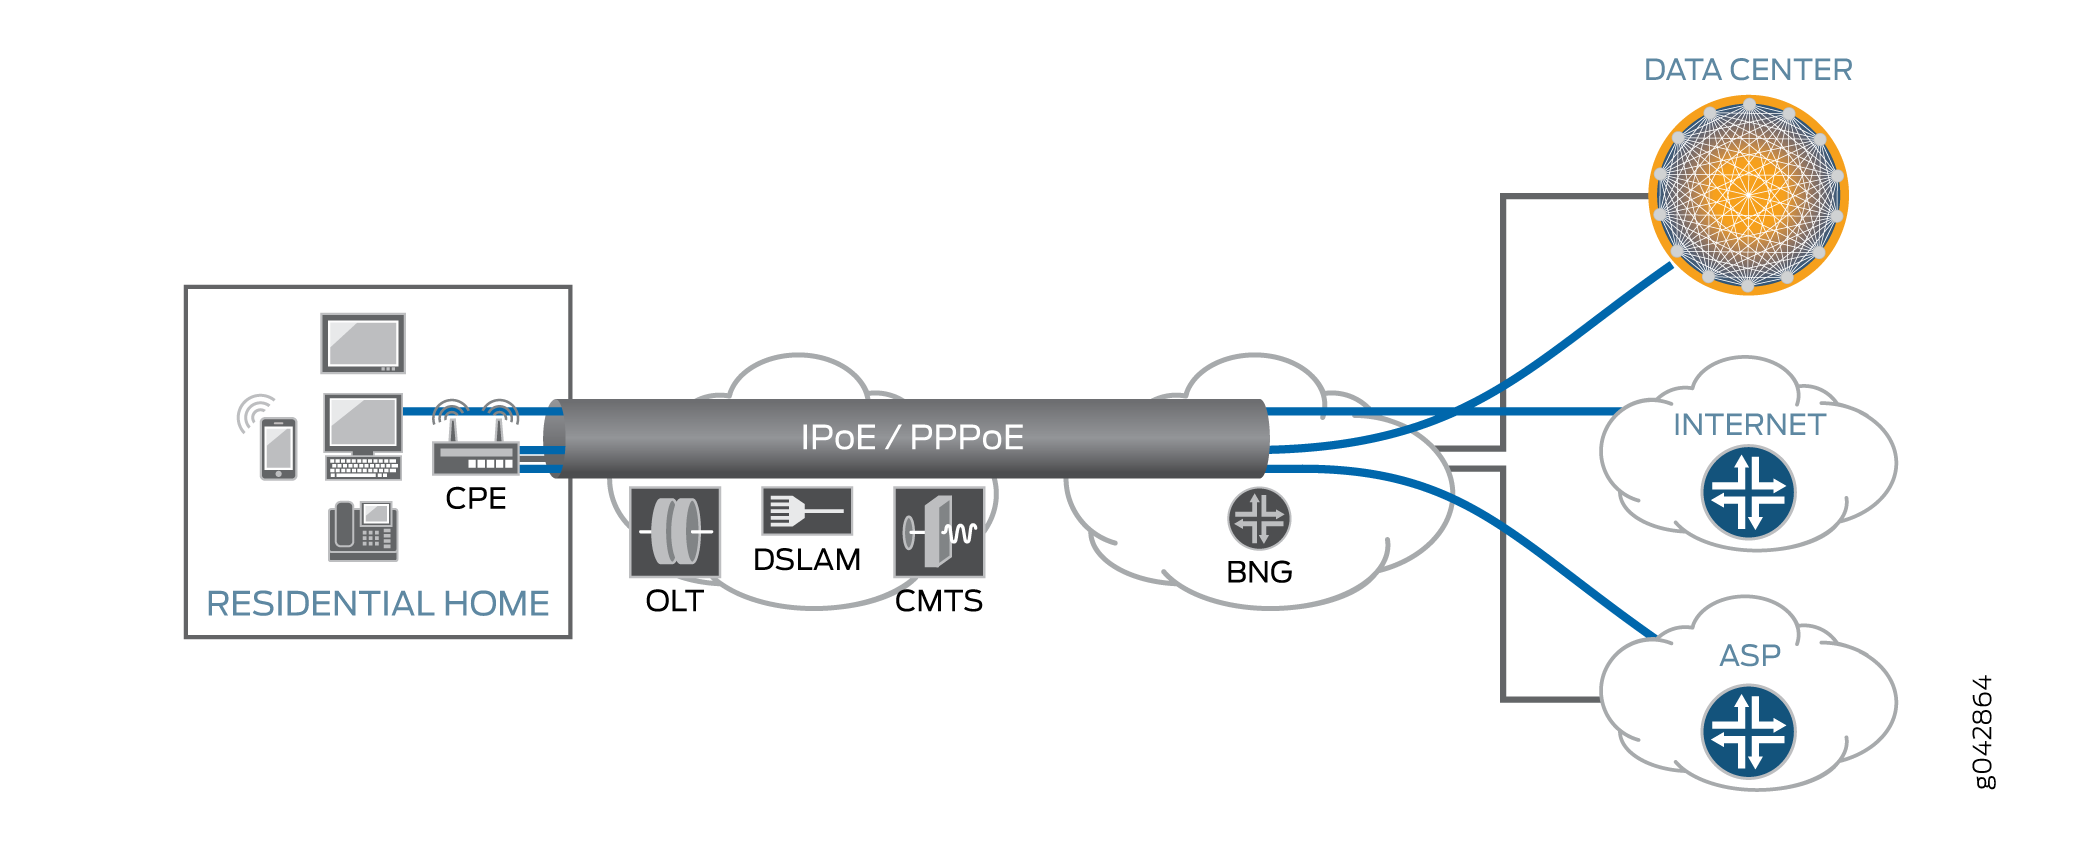 WAN-Facing IP Interfaces in the Broadband Network